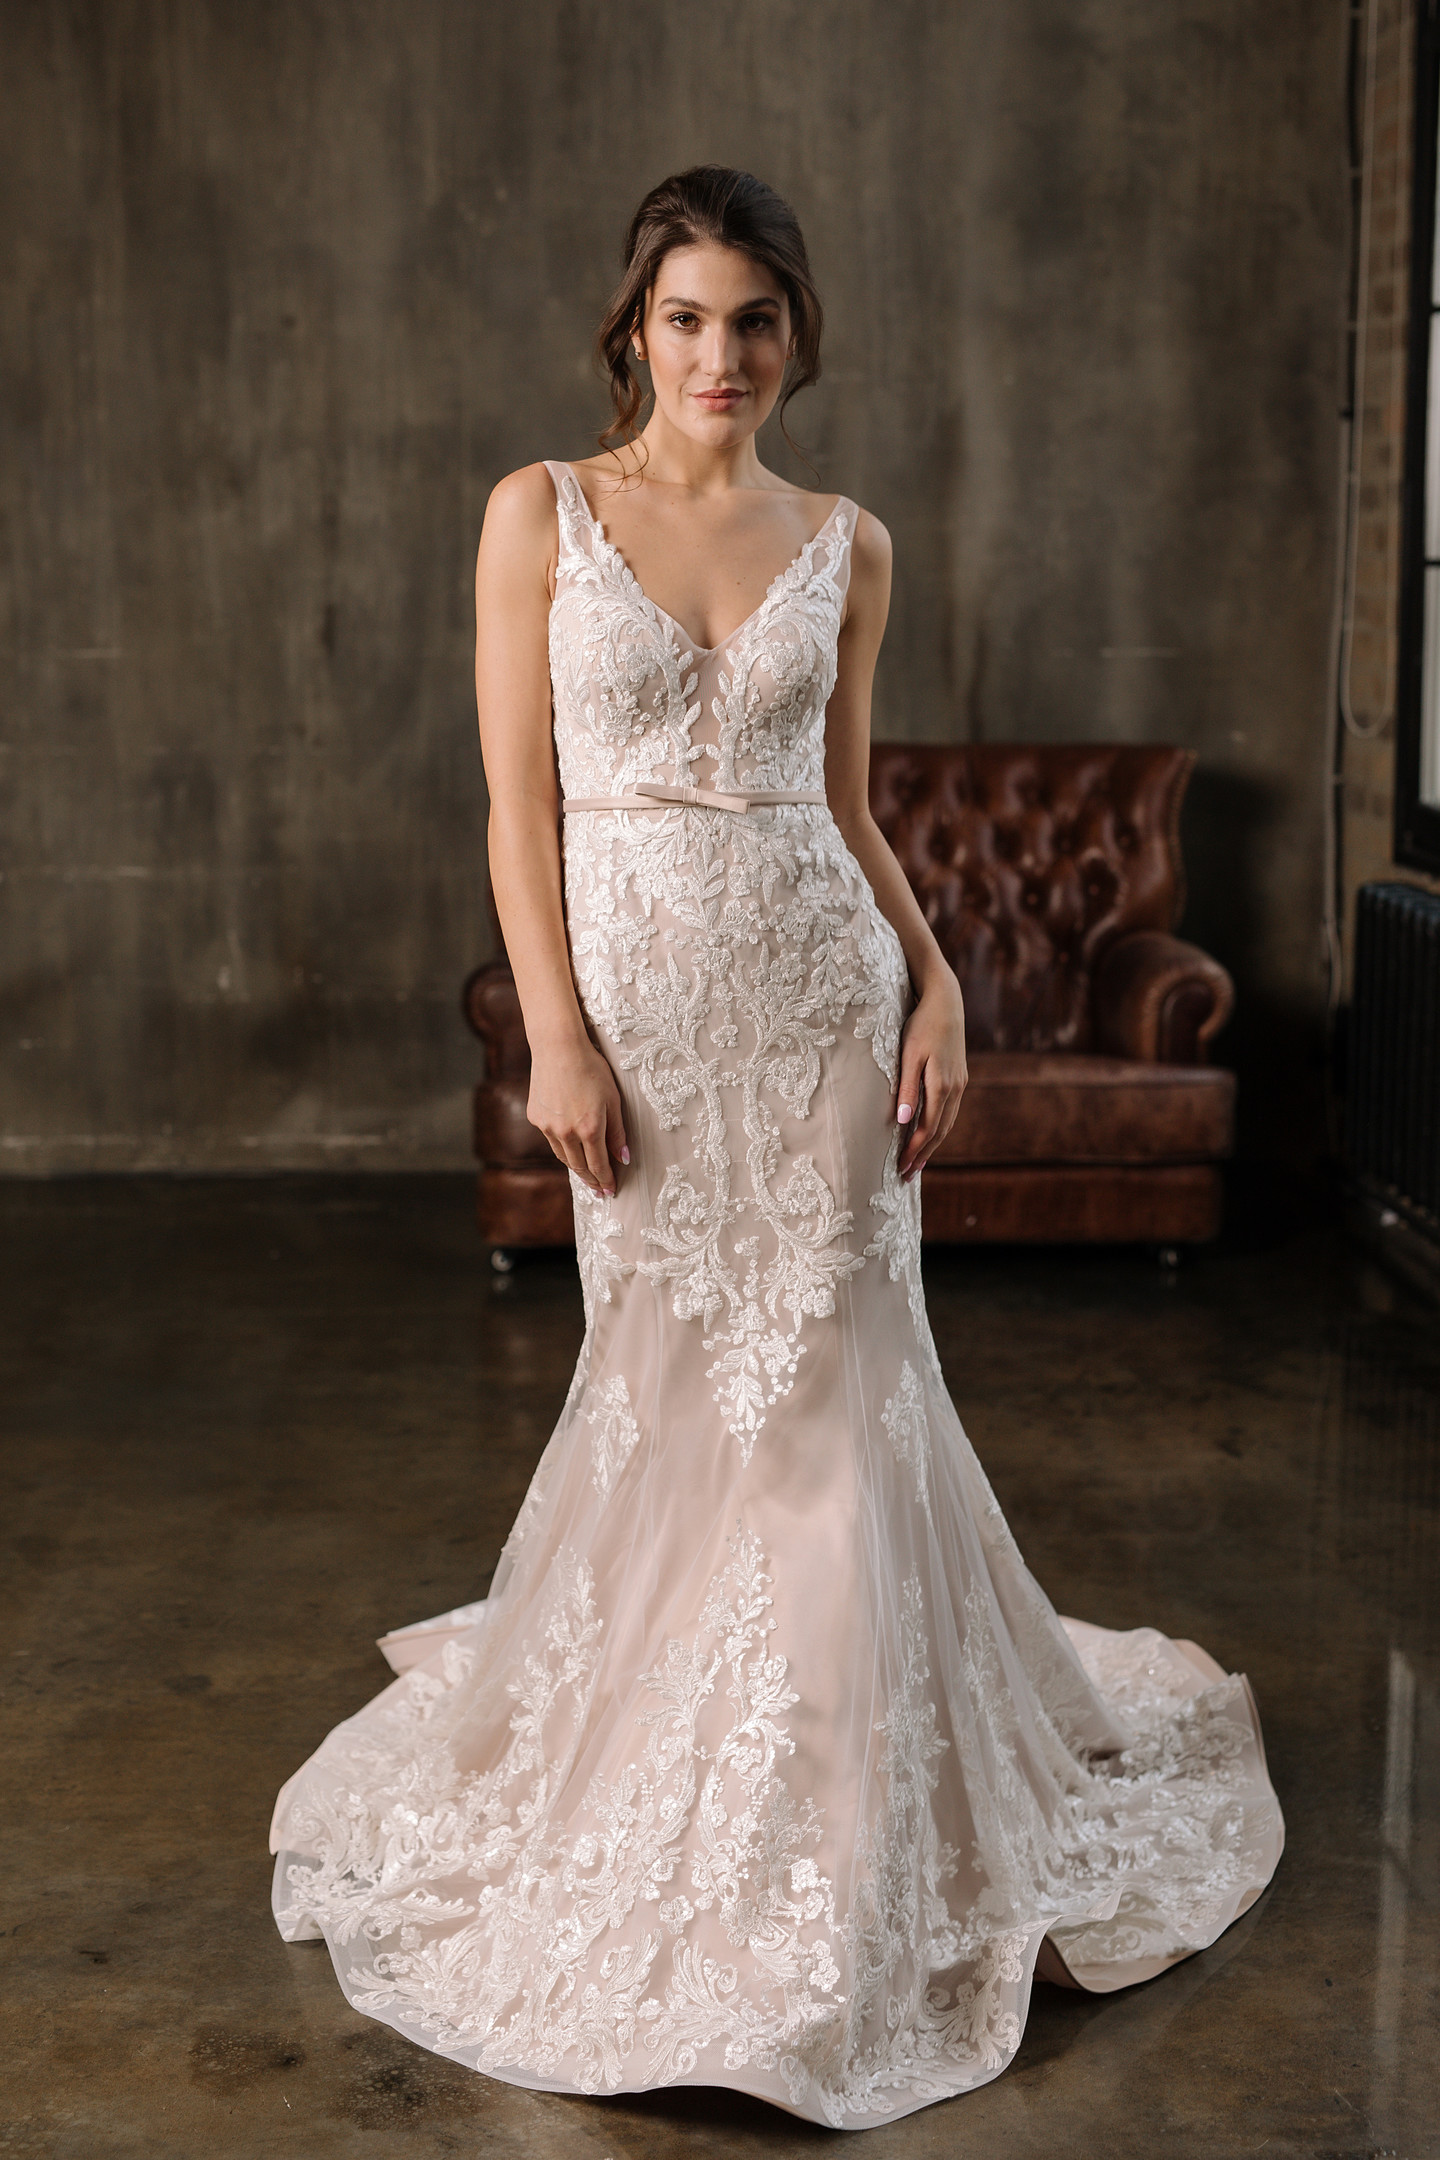 Charlotte gown, 2019, couture, dress, bridal, powder color, lace, mermaid, archive